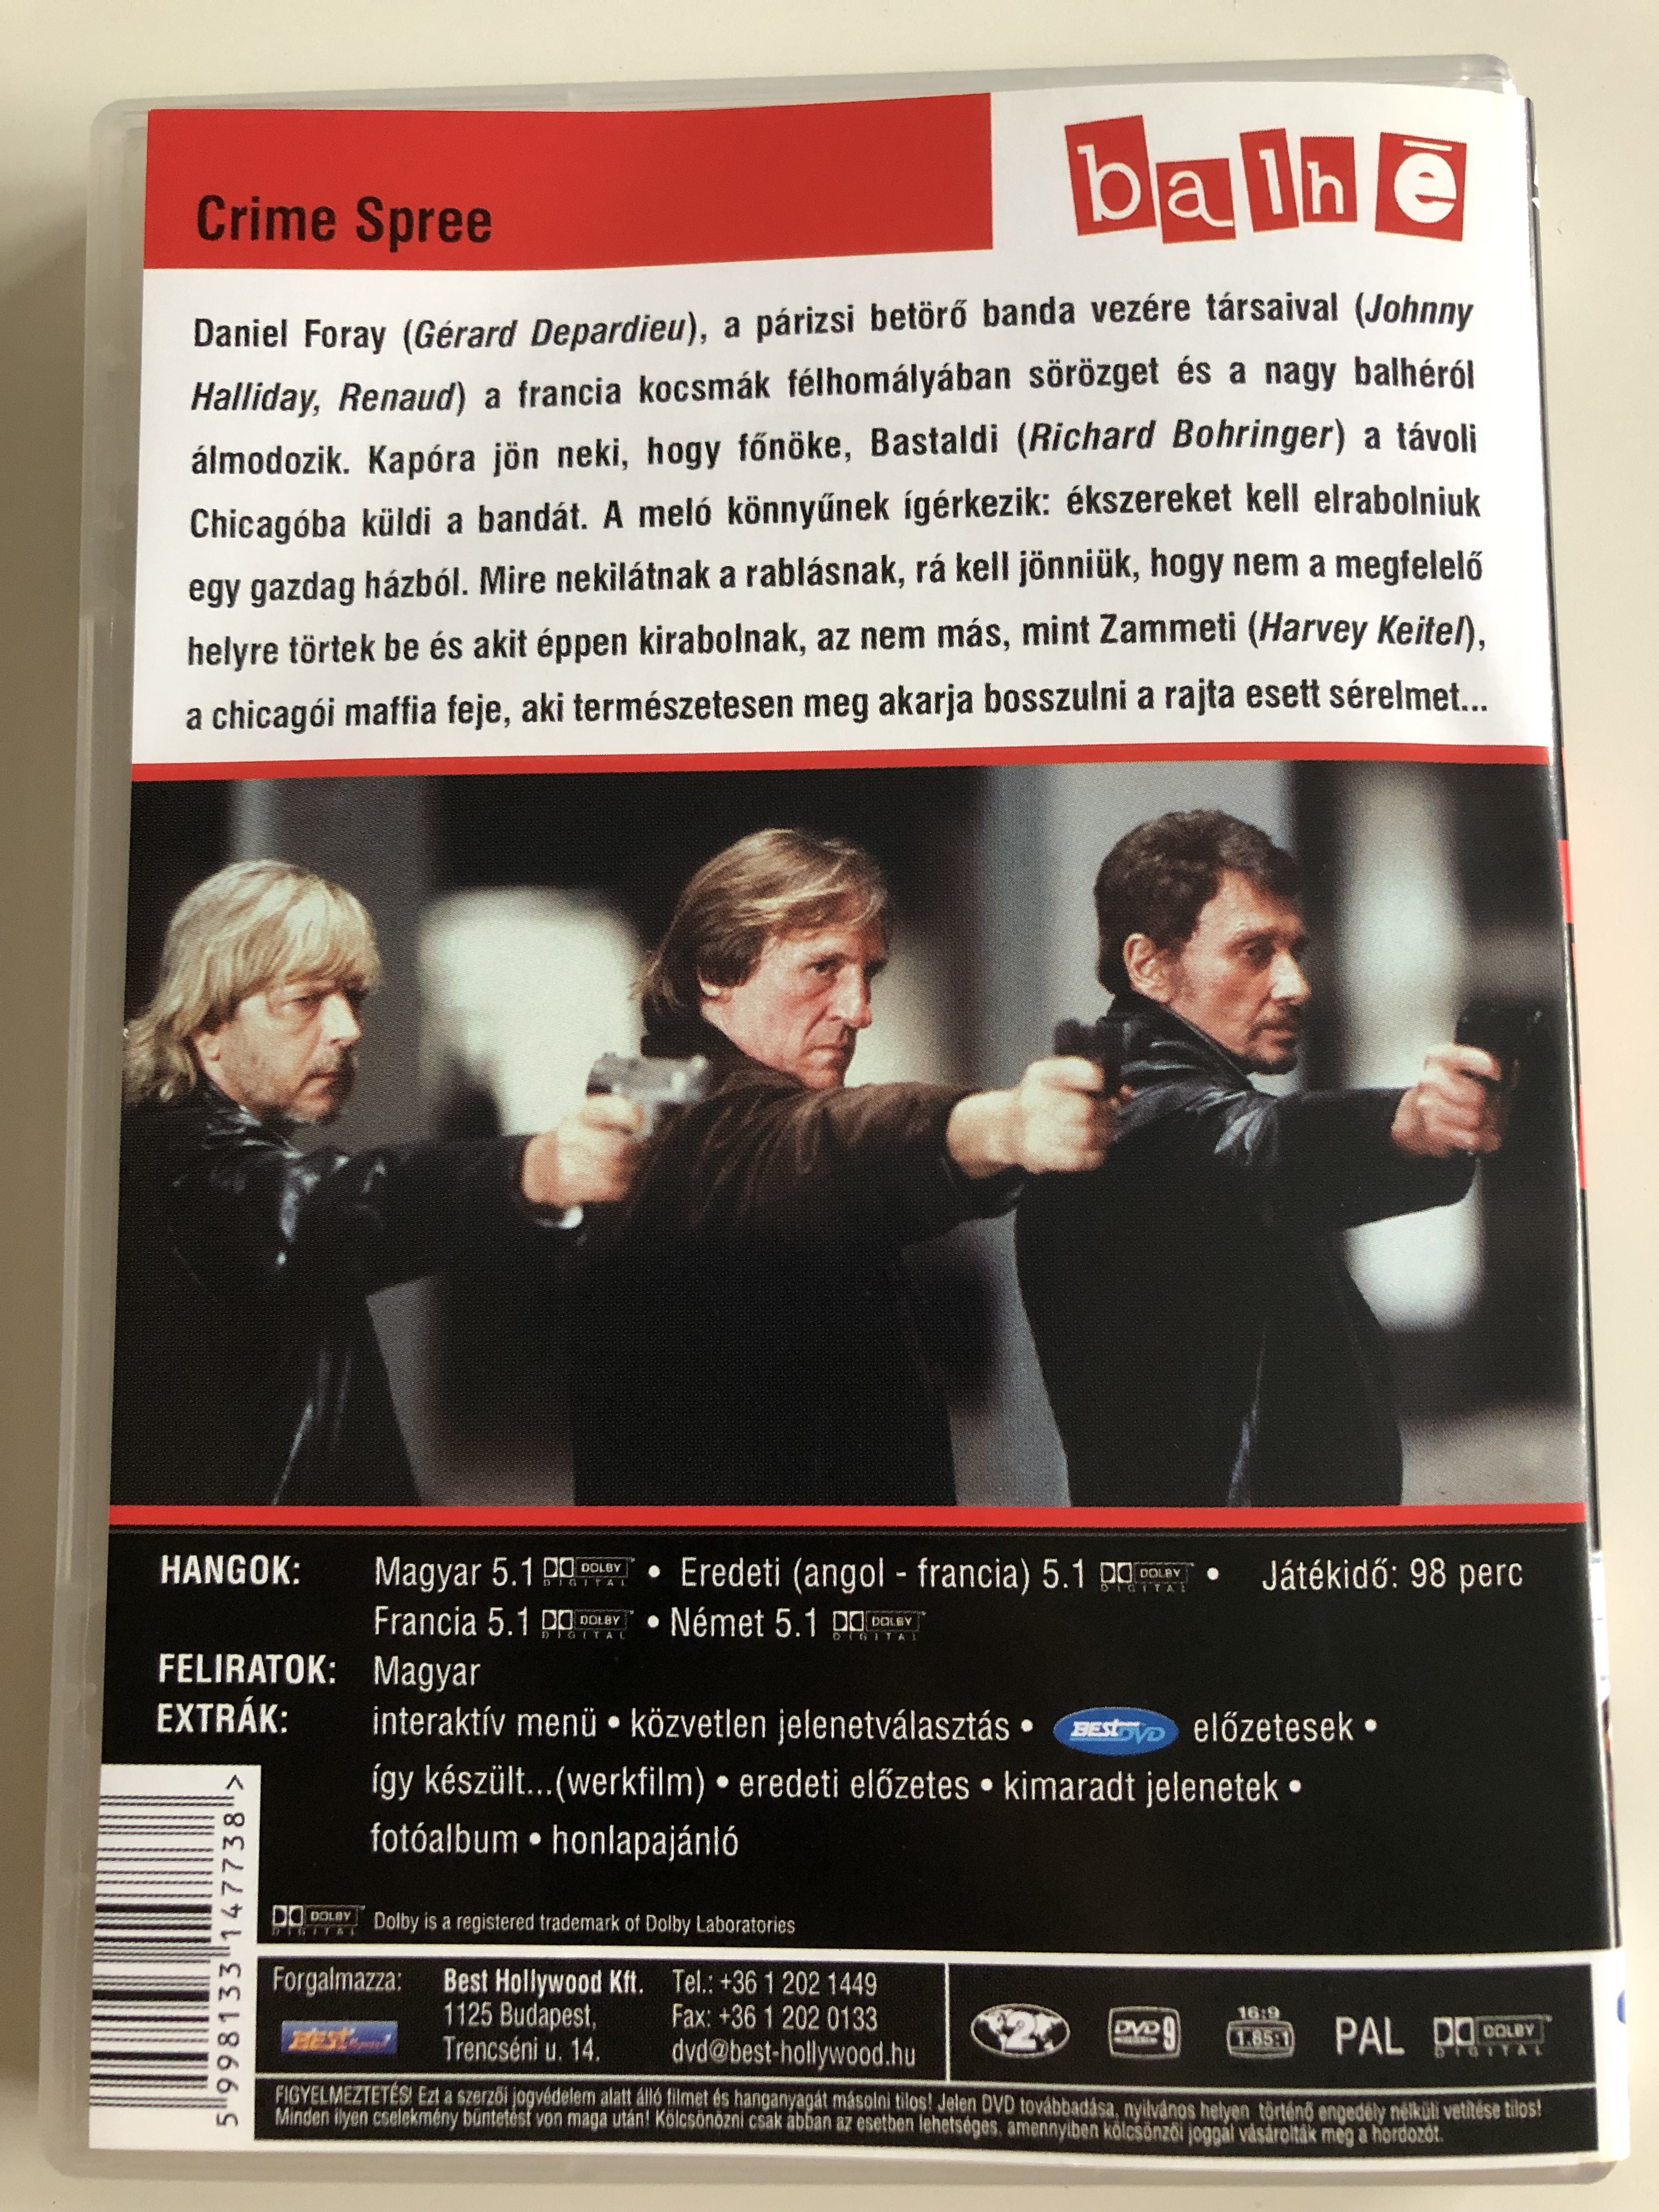 balh-dvd-2003-crime-spree-wanted-directed-by-brad-mirman-starring-g-rard-depardieu-harvey-keitel-johnny-hallyday-renaud-2-.jpg